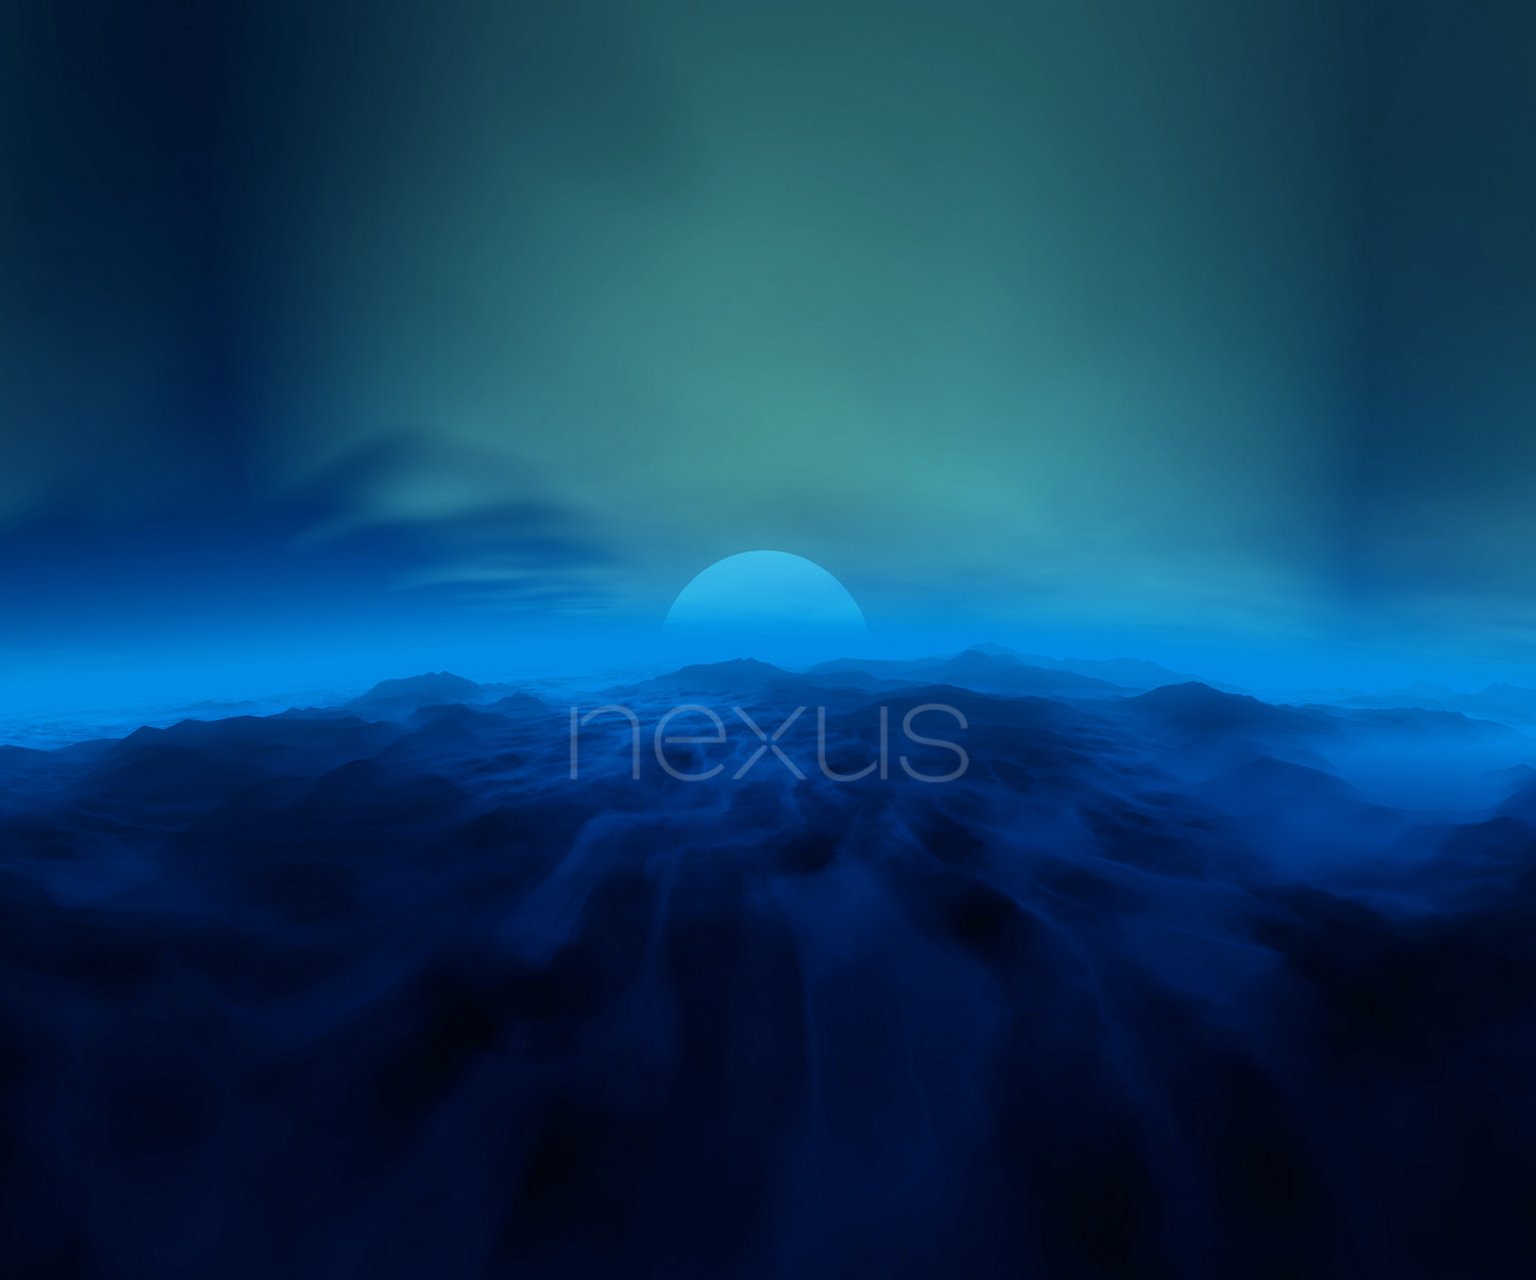 Google Nexus Logo Wallpaper High Resolution